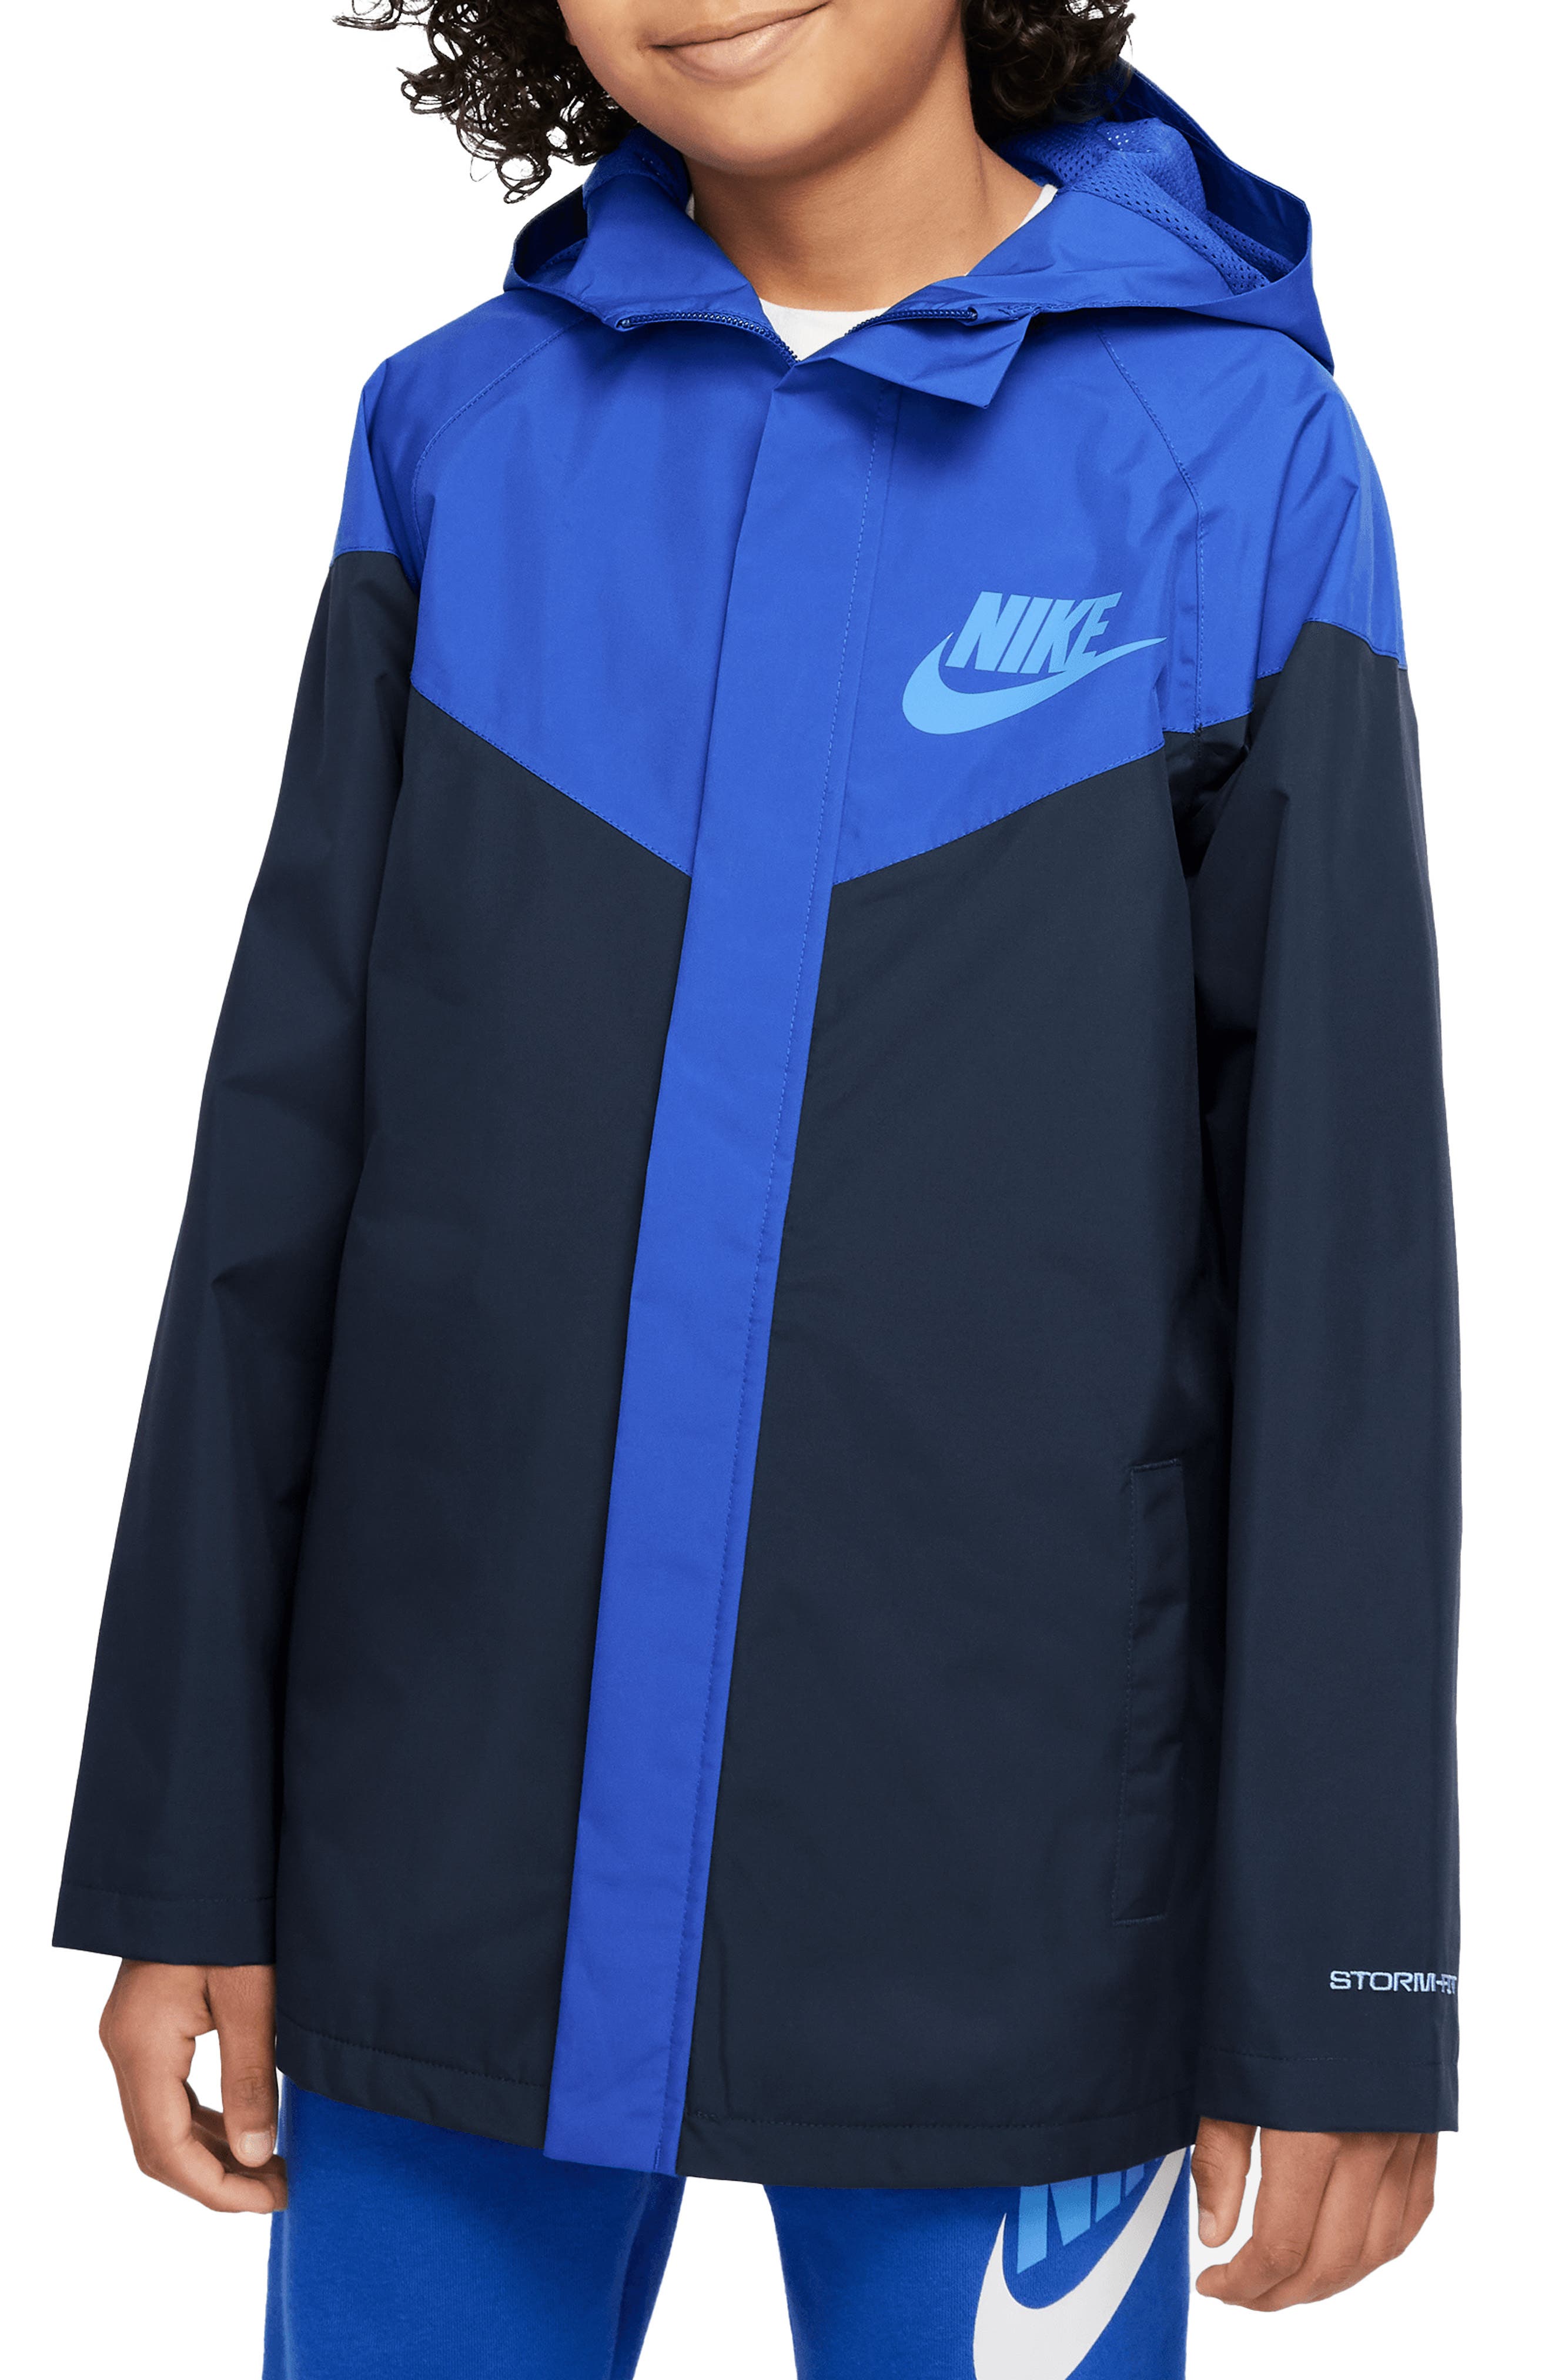 Kids Girls Boys Windbreaker Contrast Color Block Navy Hooded Jacket Rainmac Coat